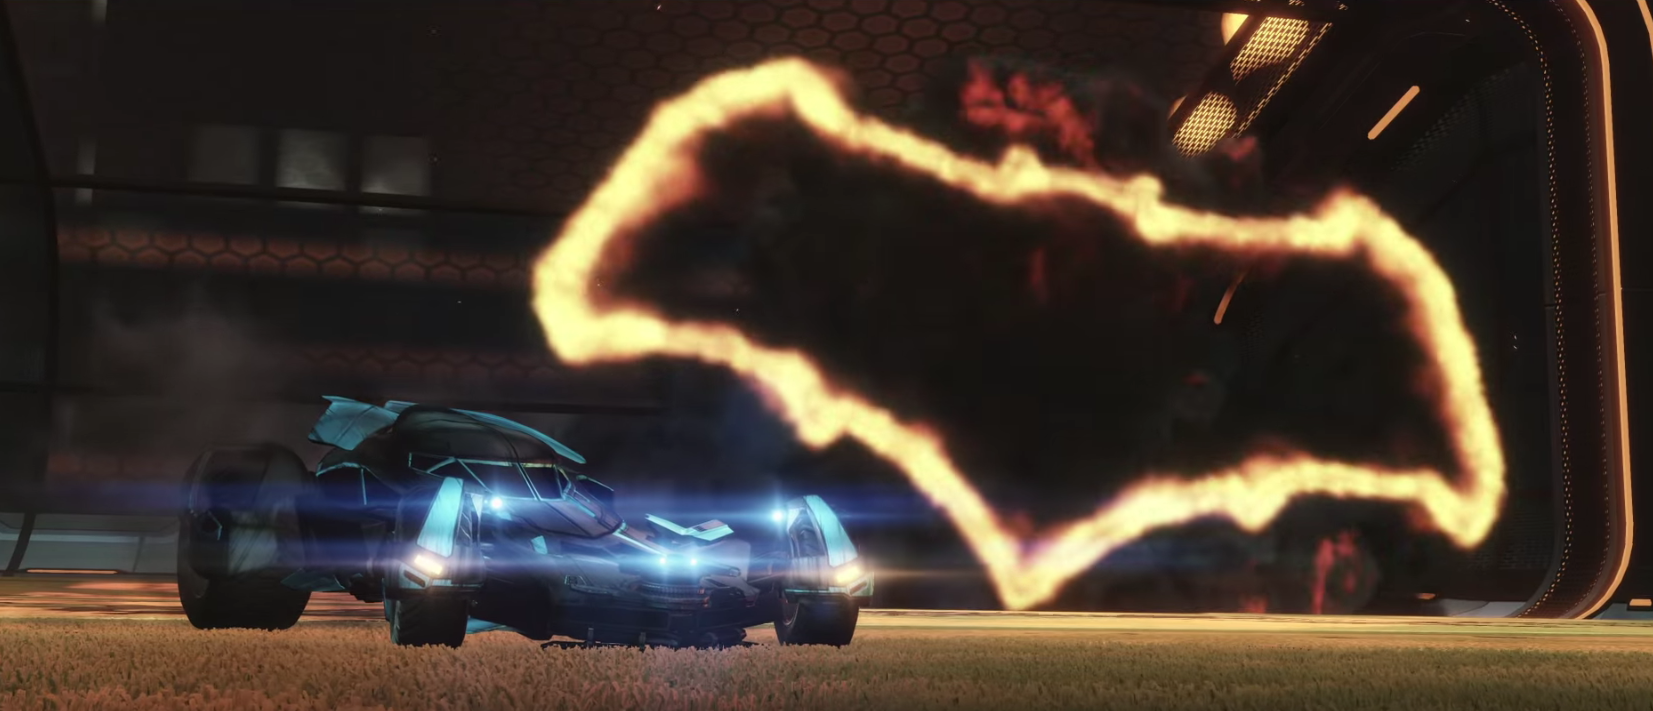 Watch Batman v Superman: Dawn of Justice's Batmobile in Rocket League action